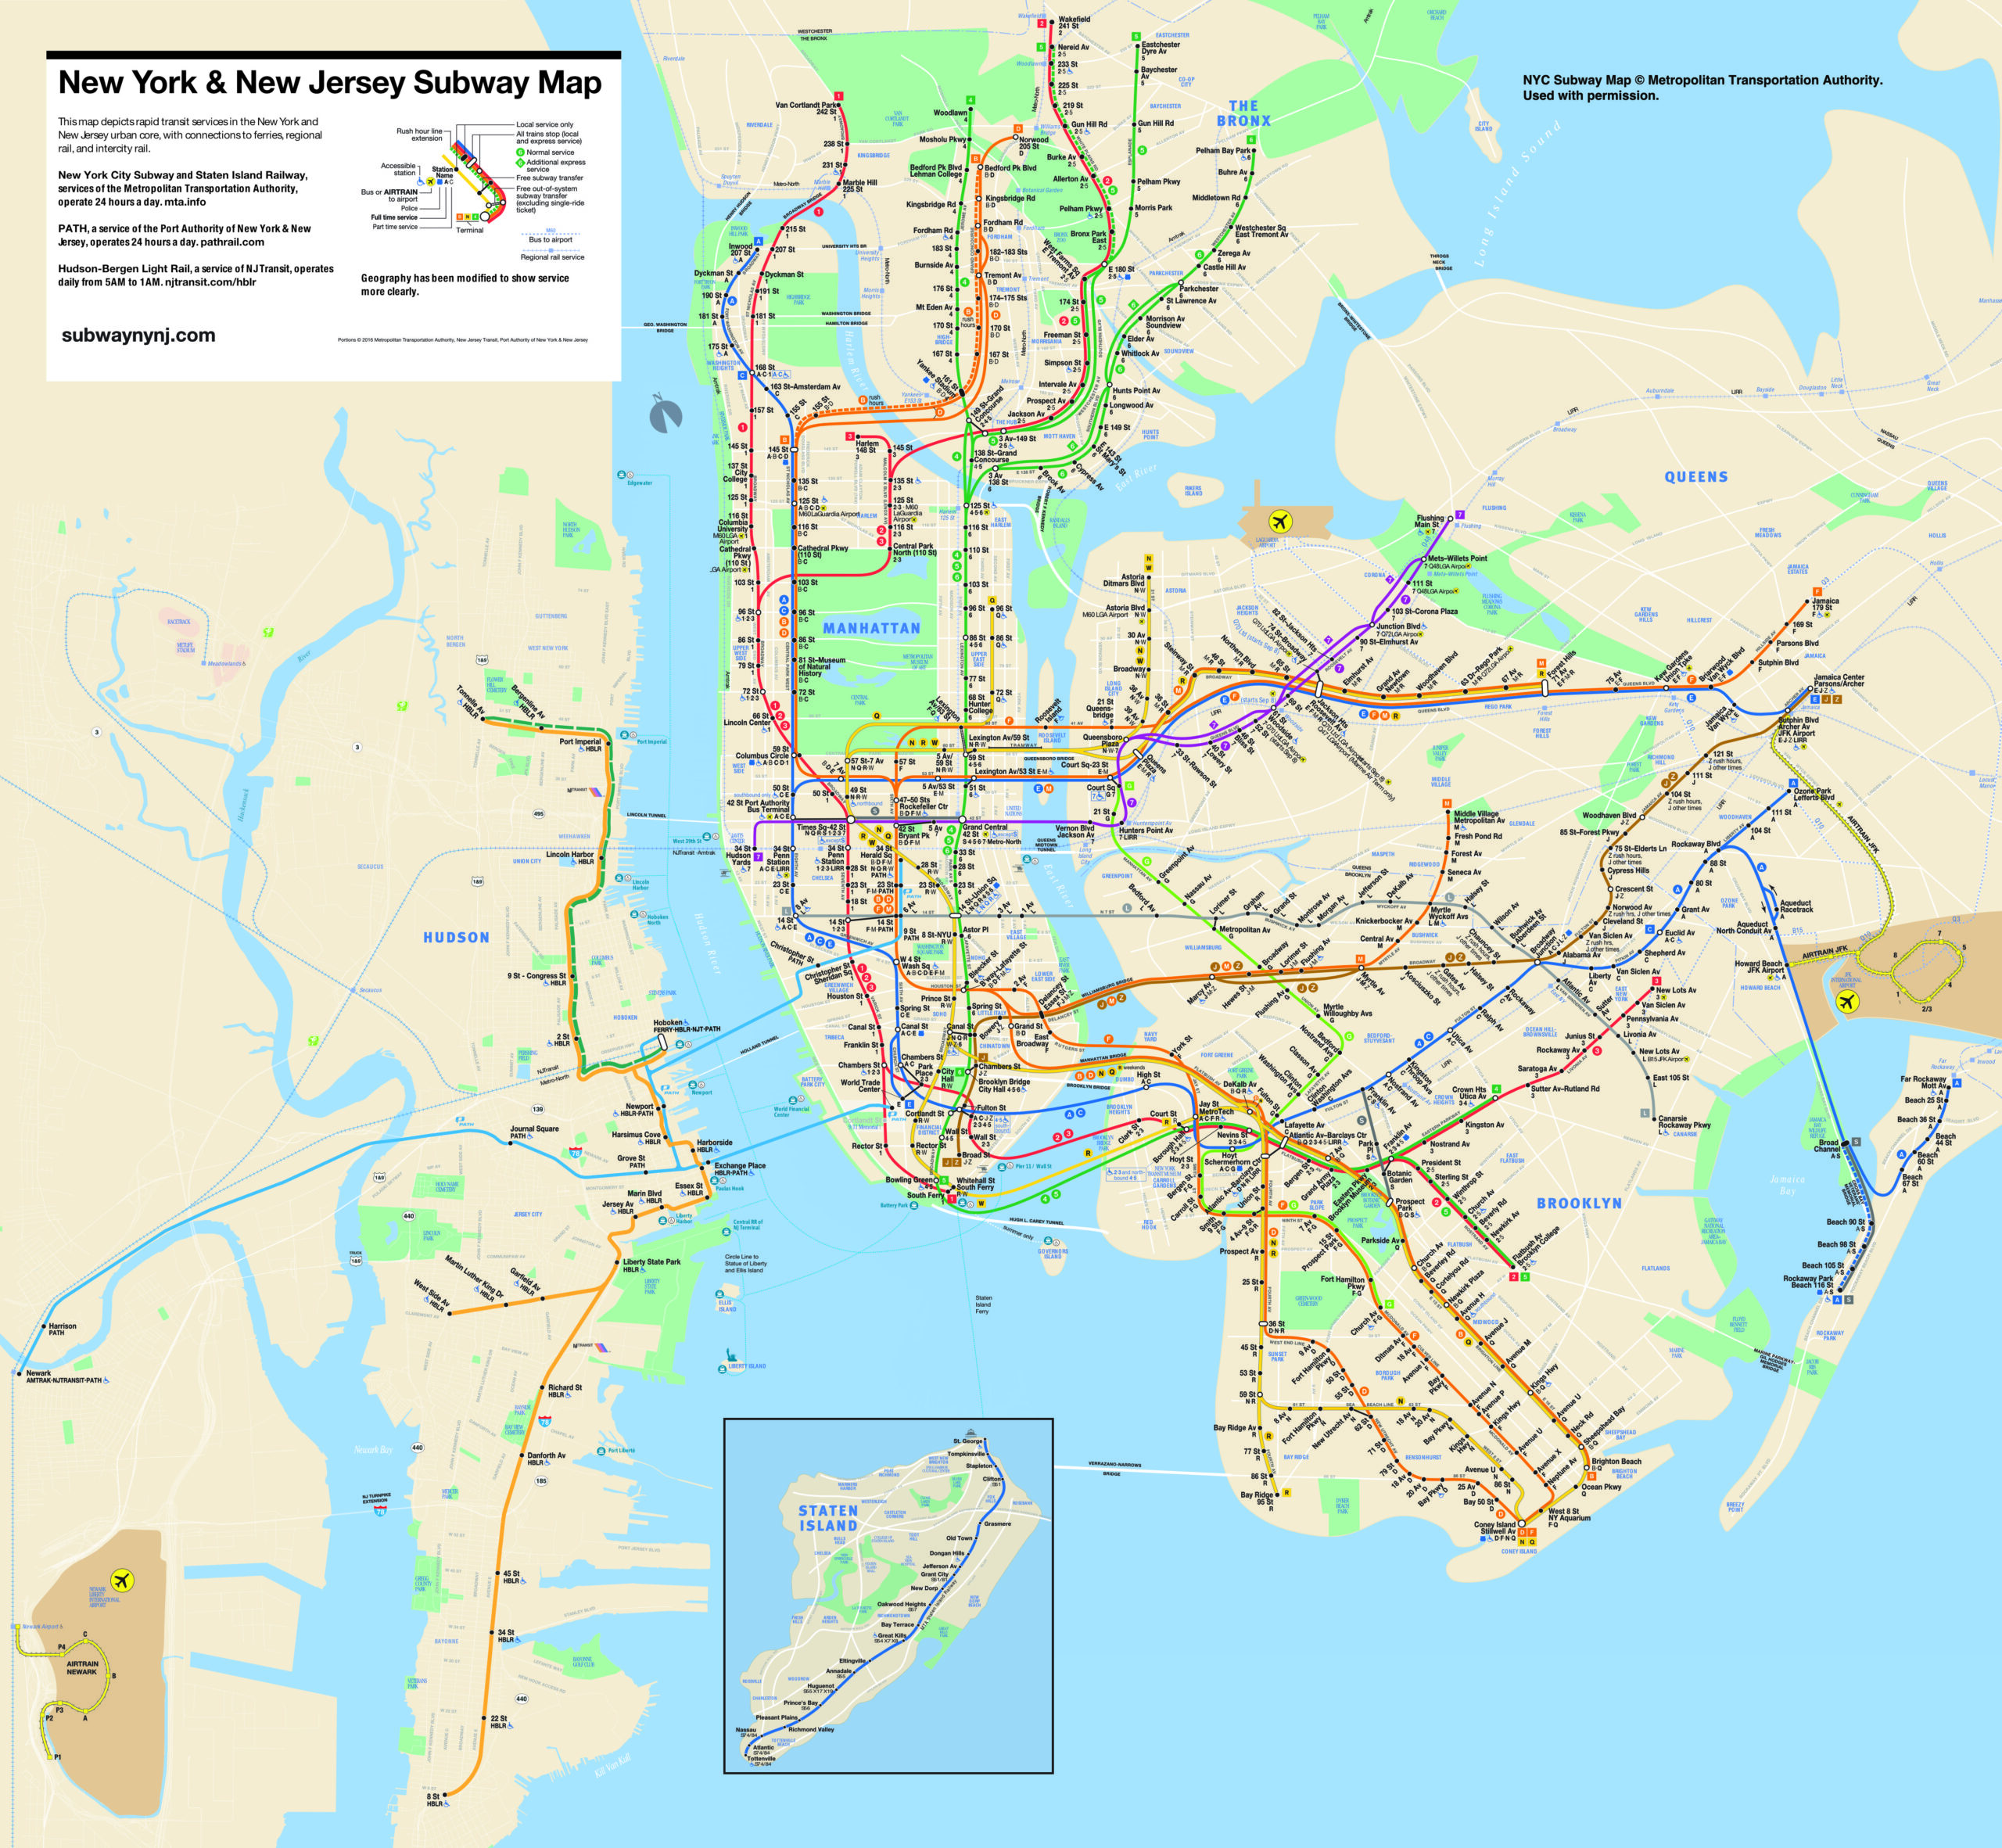 New York & New Jersey Subway Map